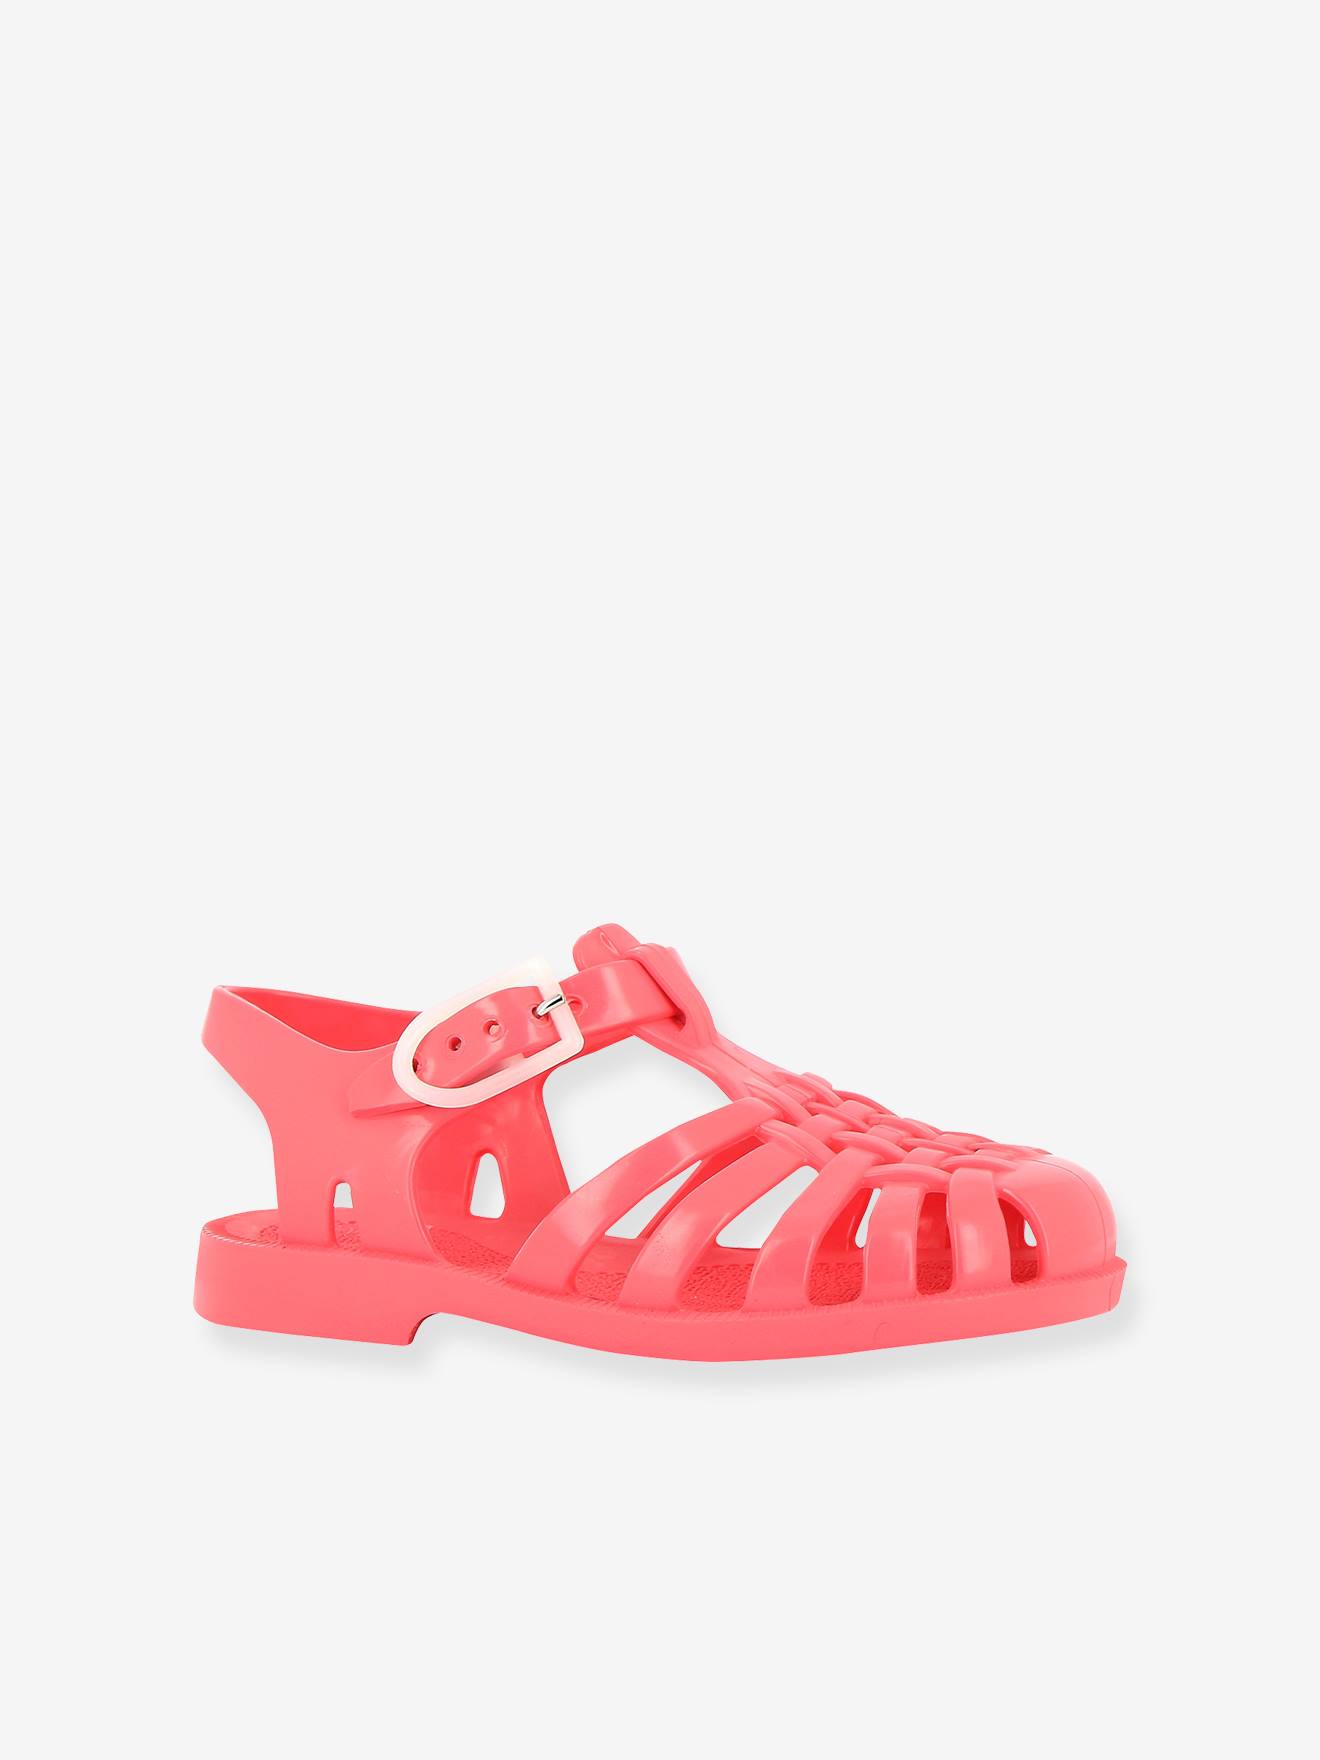 Sun Meduse(r) Sandals for Girls sweet pink